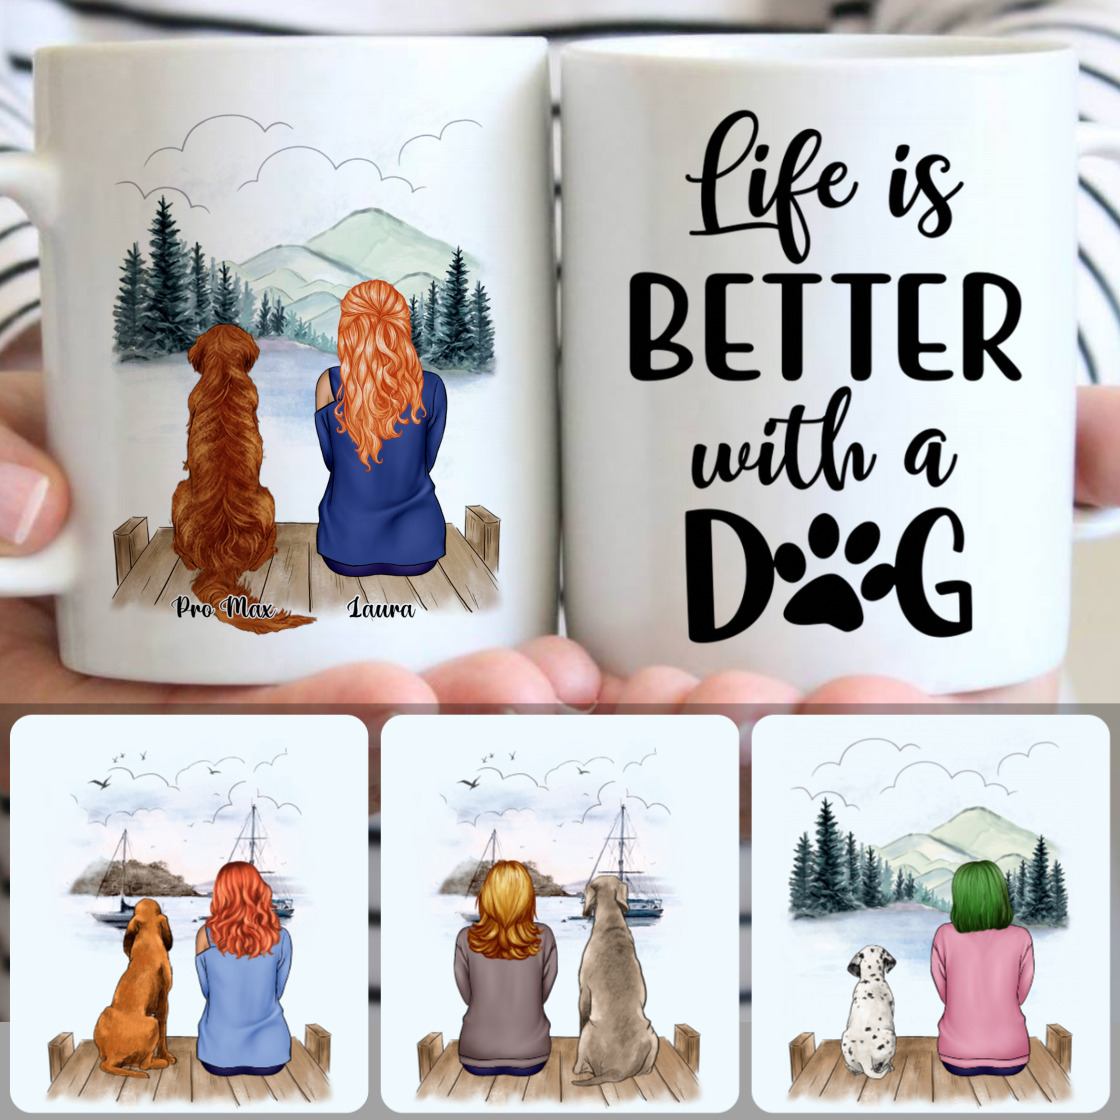 Personalized Mug, Meaningful Gifts For Dog Owner, Girl & Dog, Customized Coffee Mug With Names